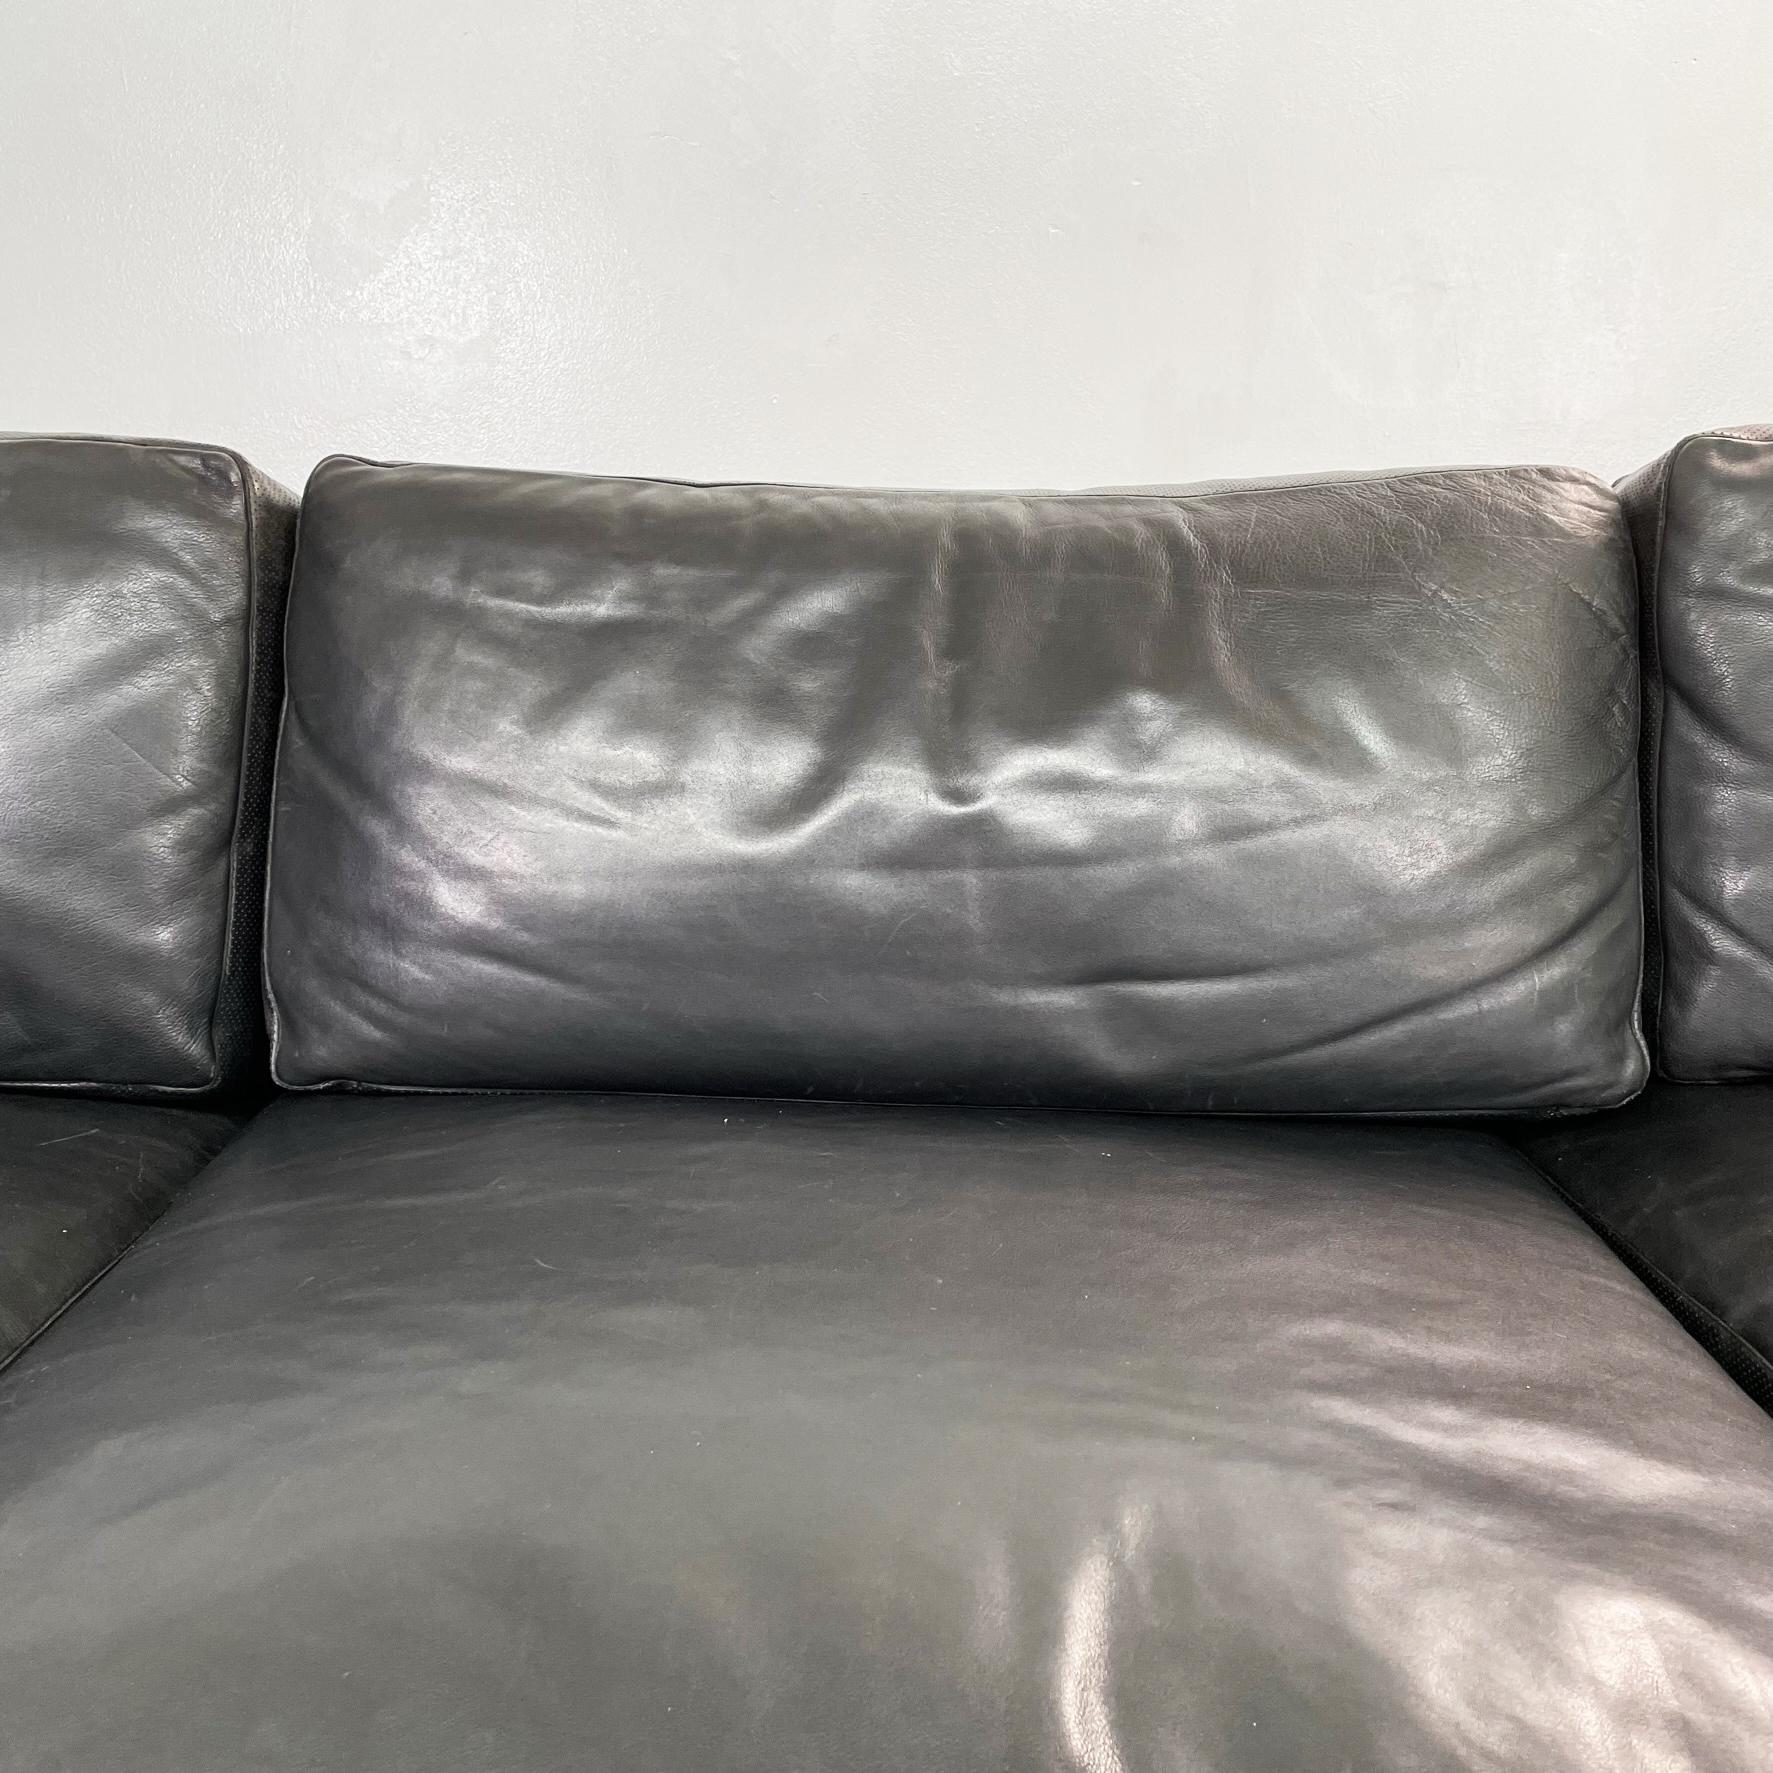 Late 20th Century Italian Modern Black Leather Sofa Diesis by Antonio Citterio for B&B, 1980s For Sale